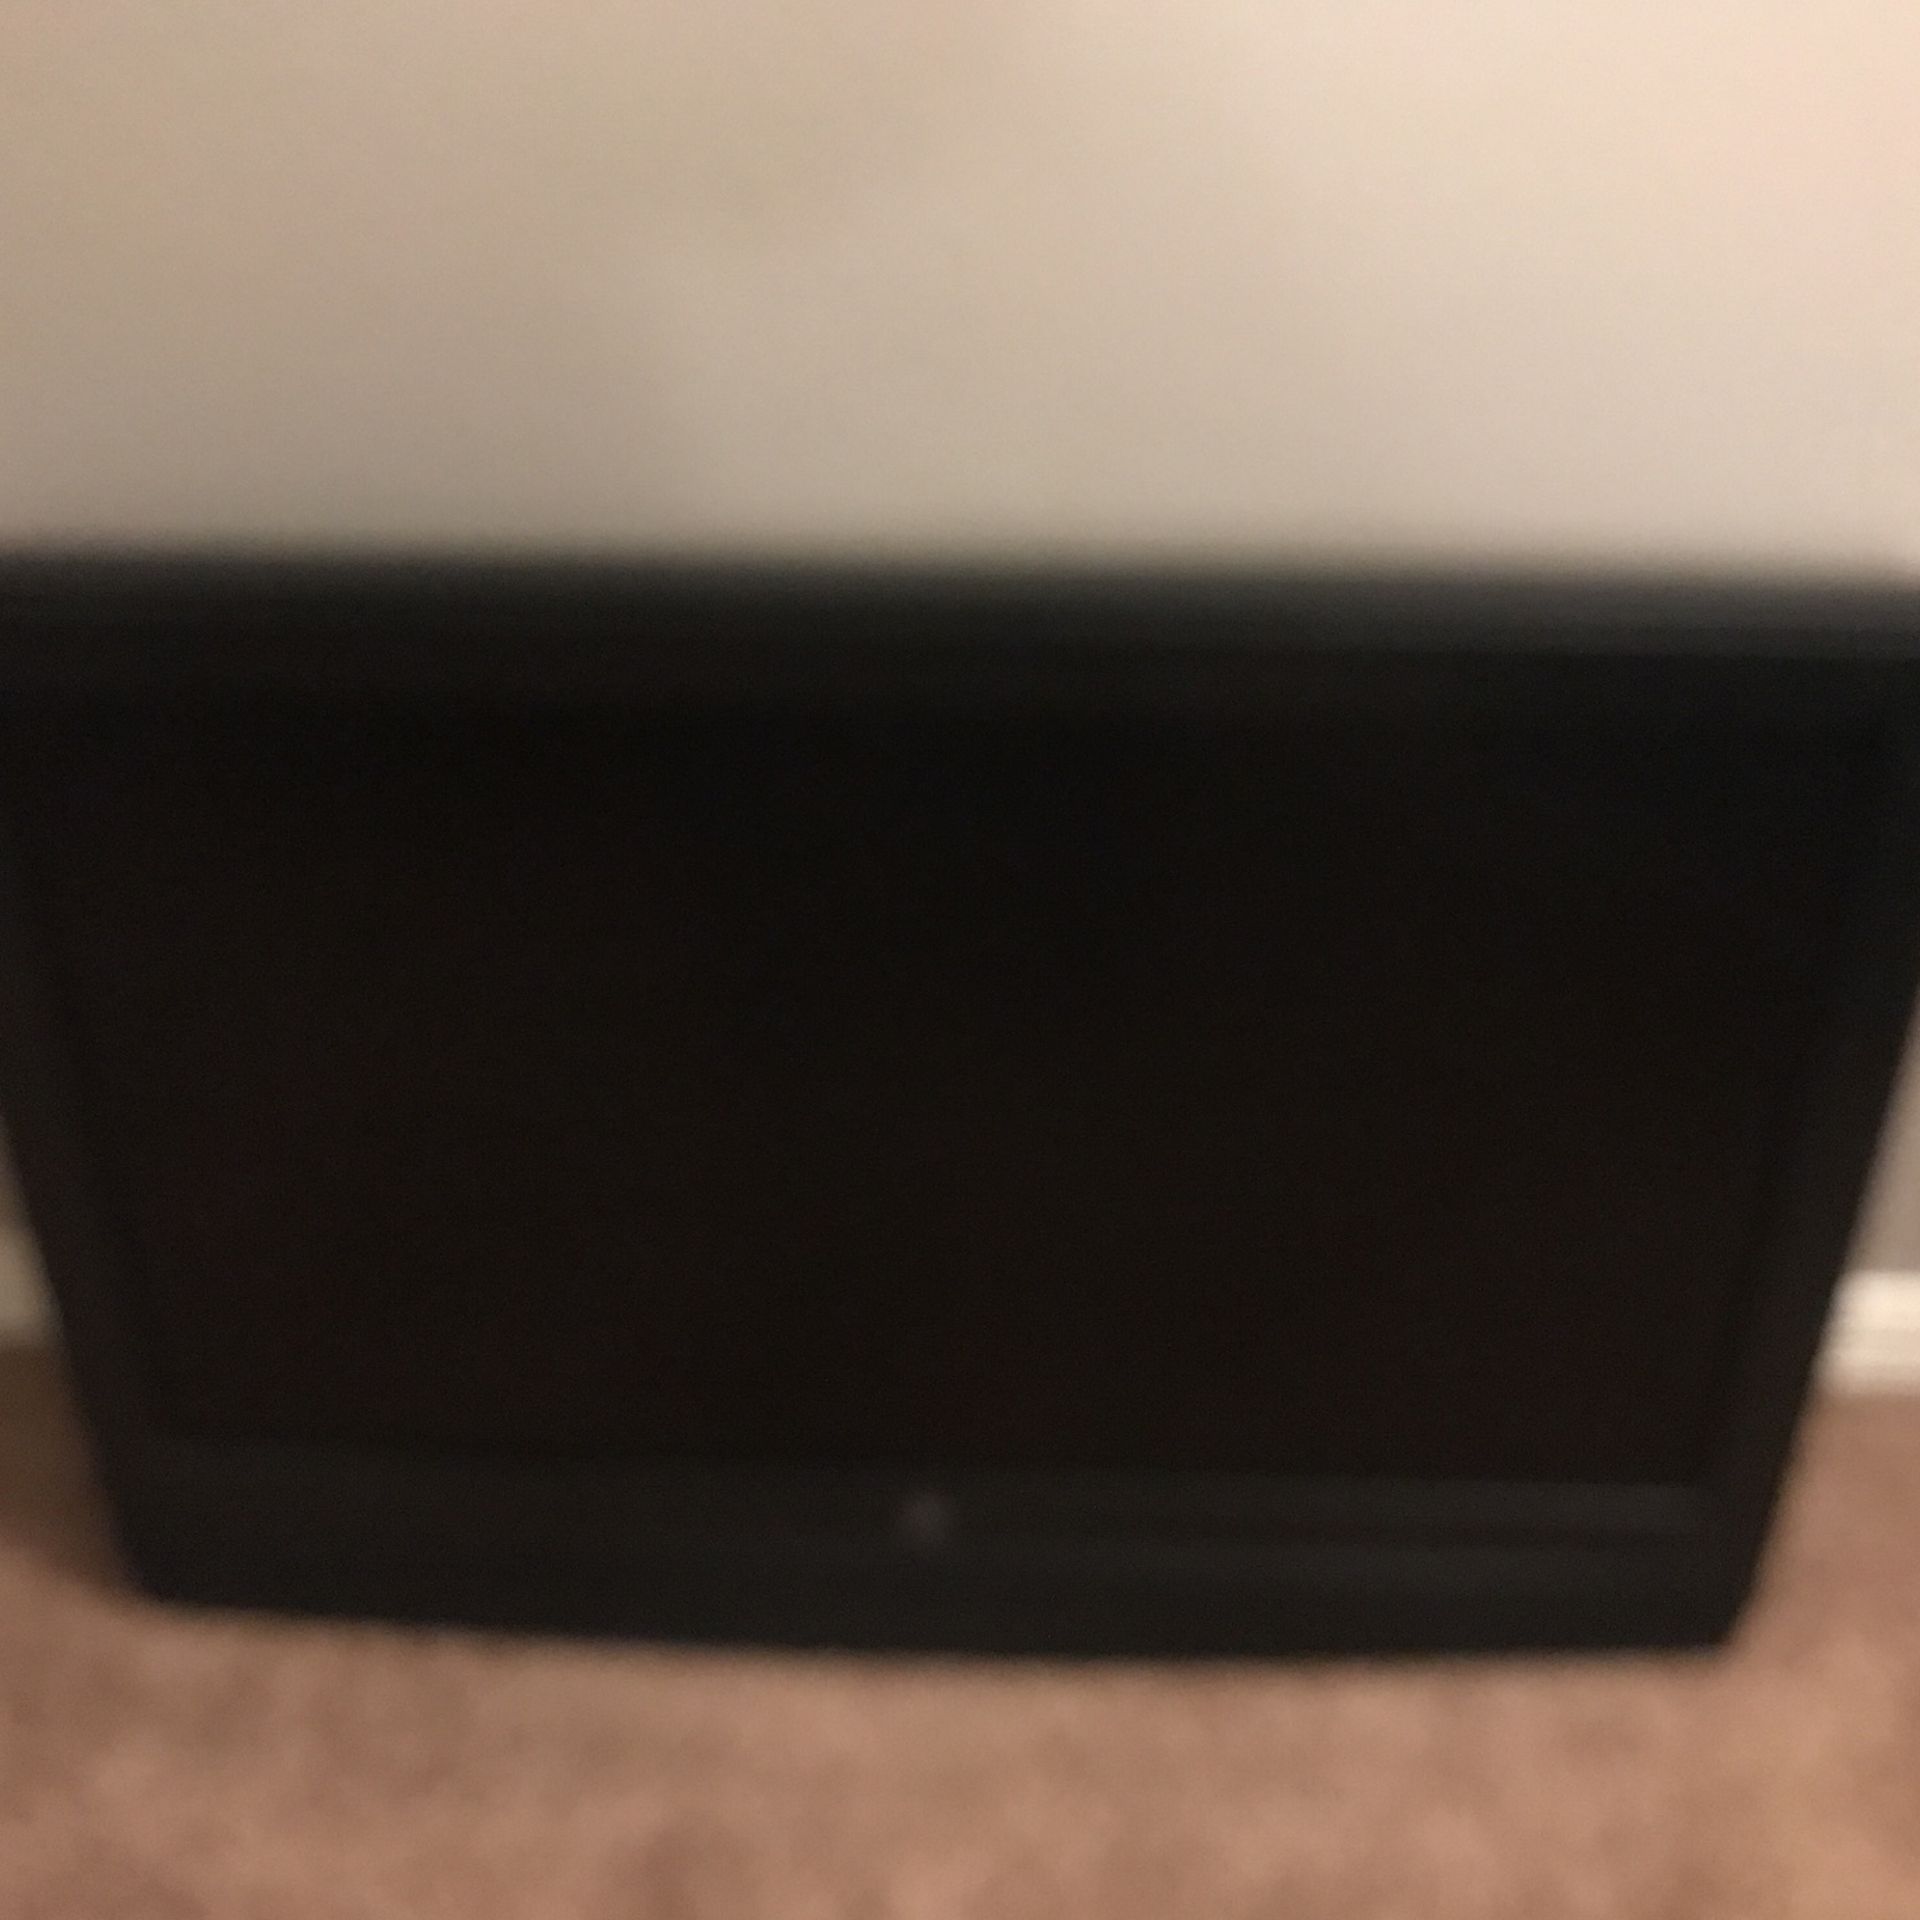 32 inch TV flat screen LCD